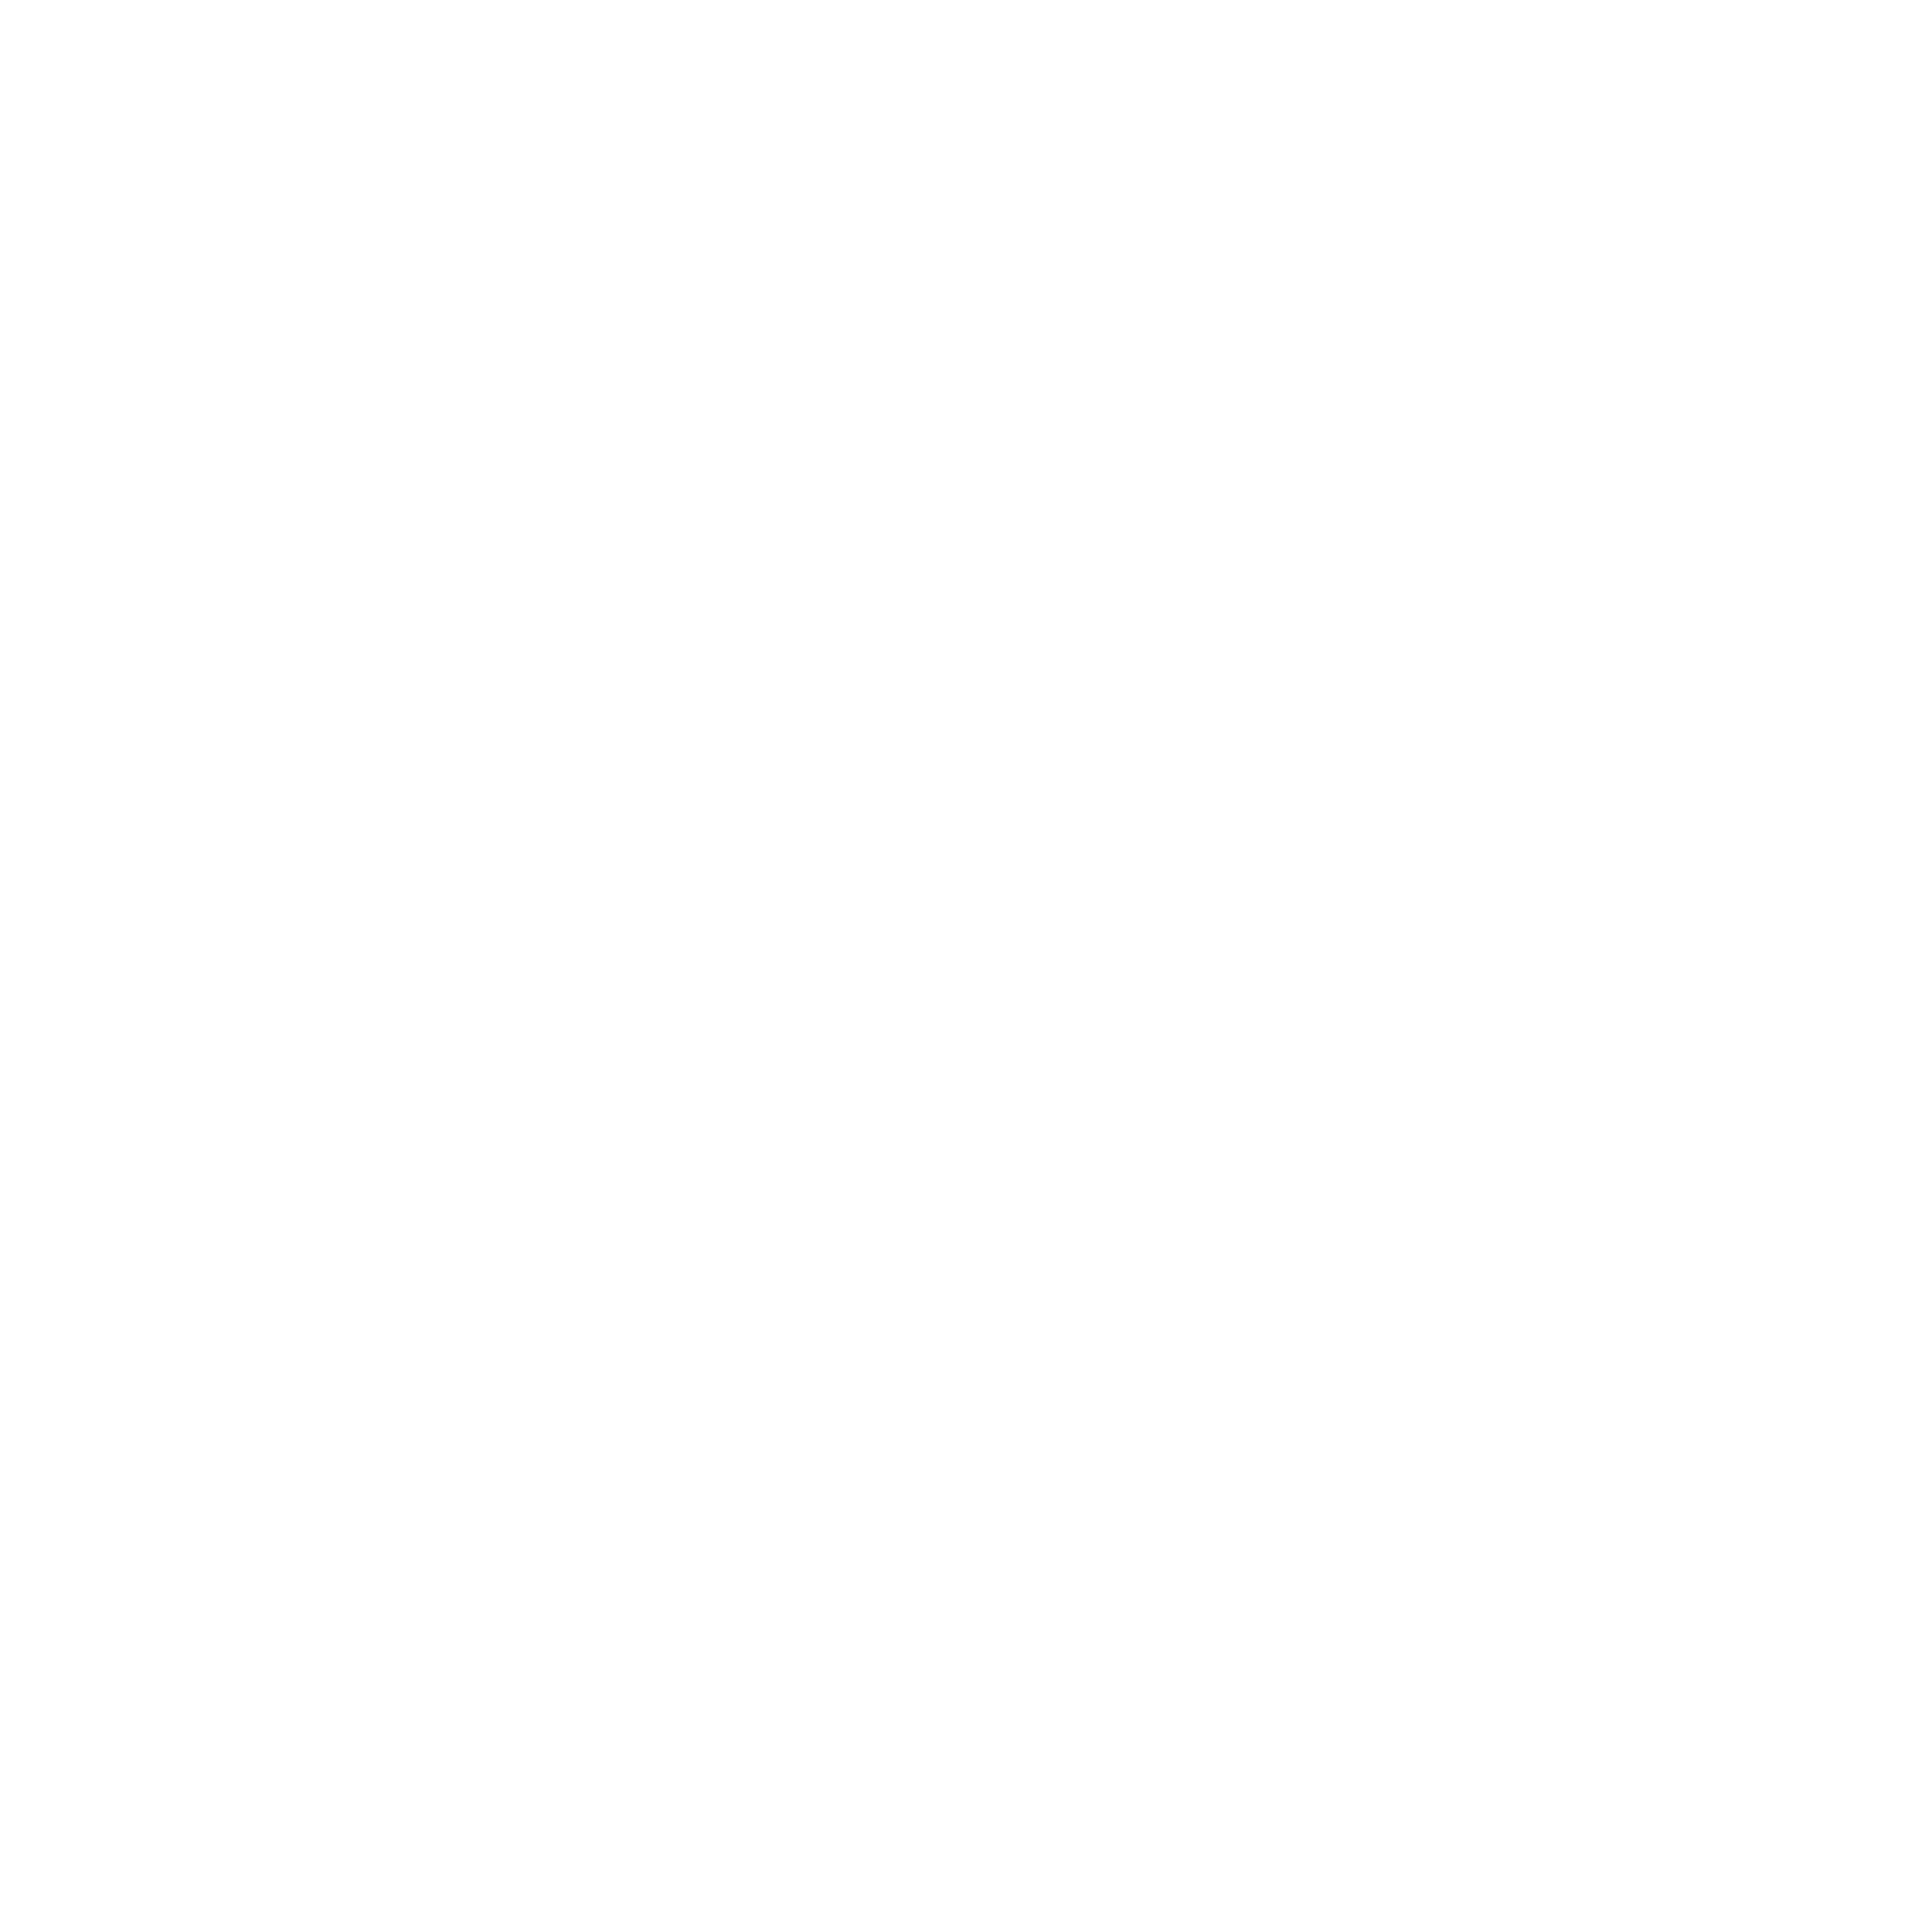 Modine Logo - Modine Logo PNG Transparent & SVG Vector - Freebie Supply